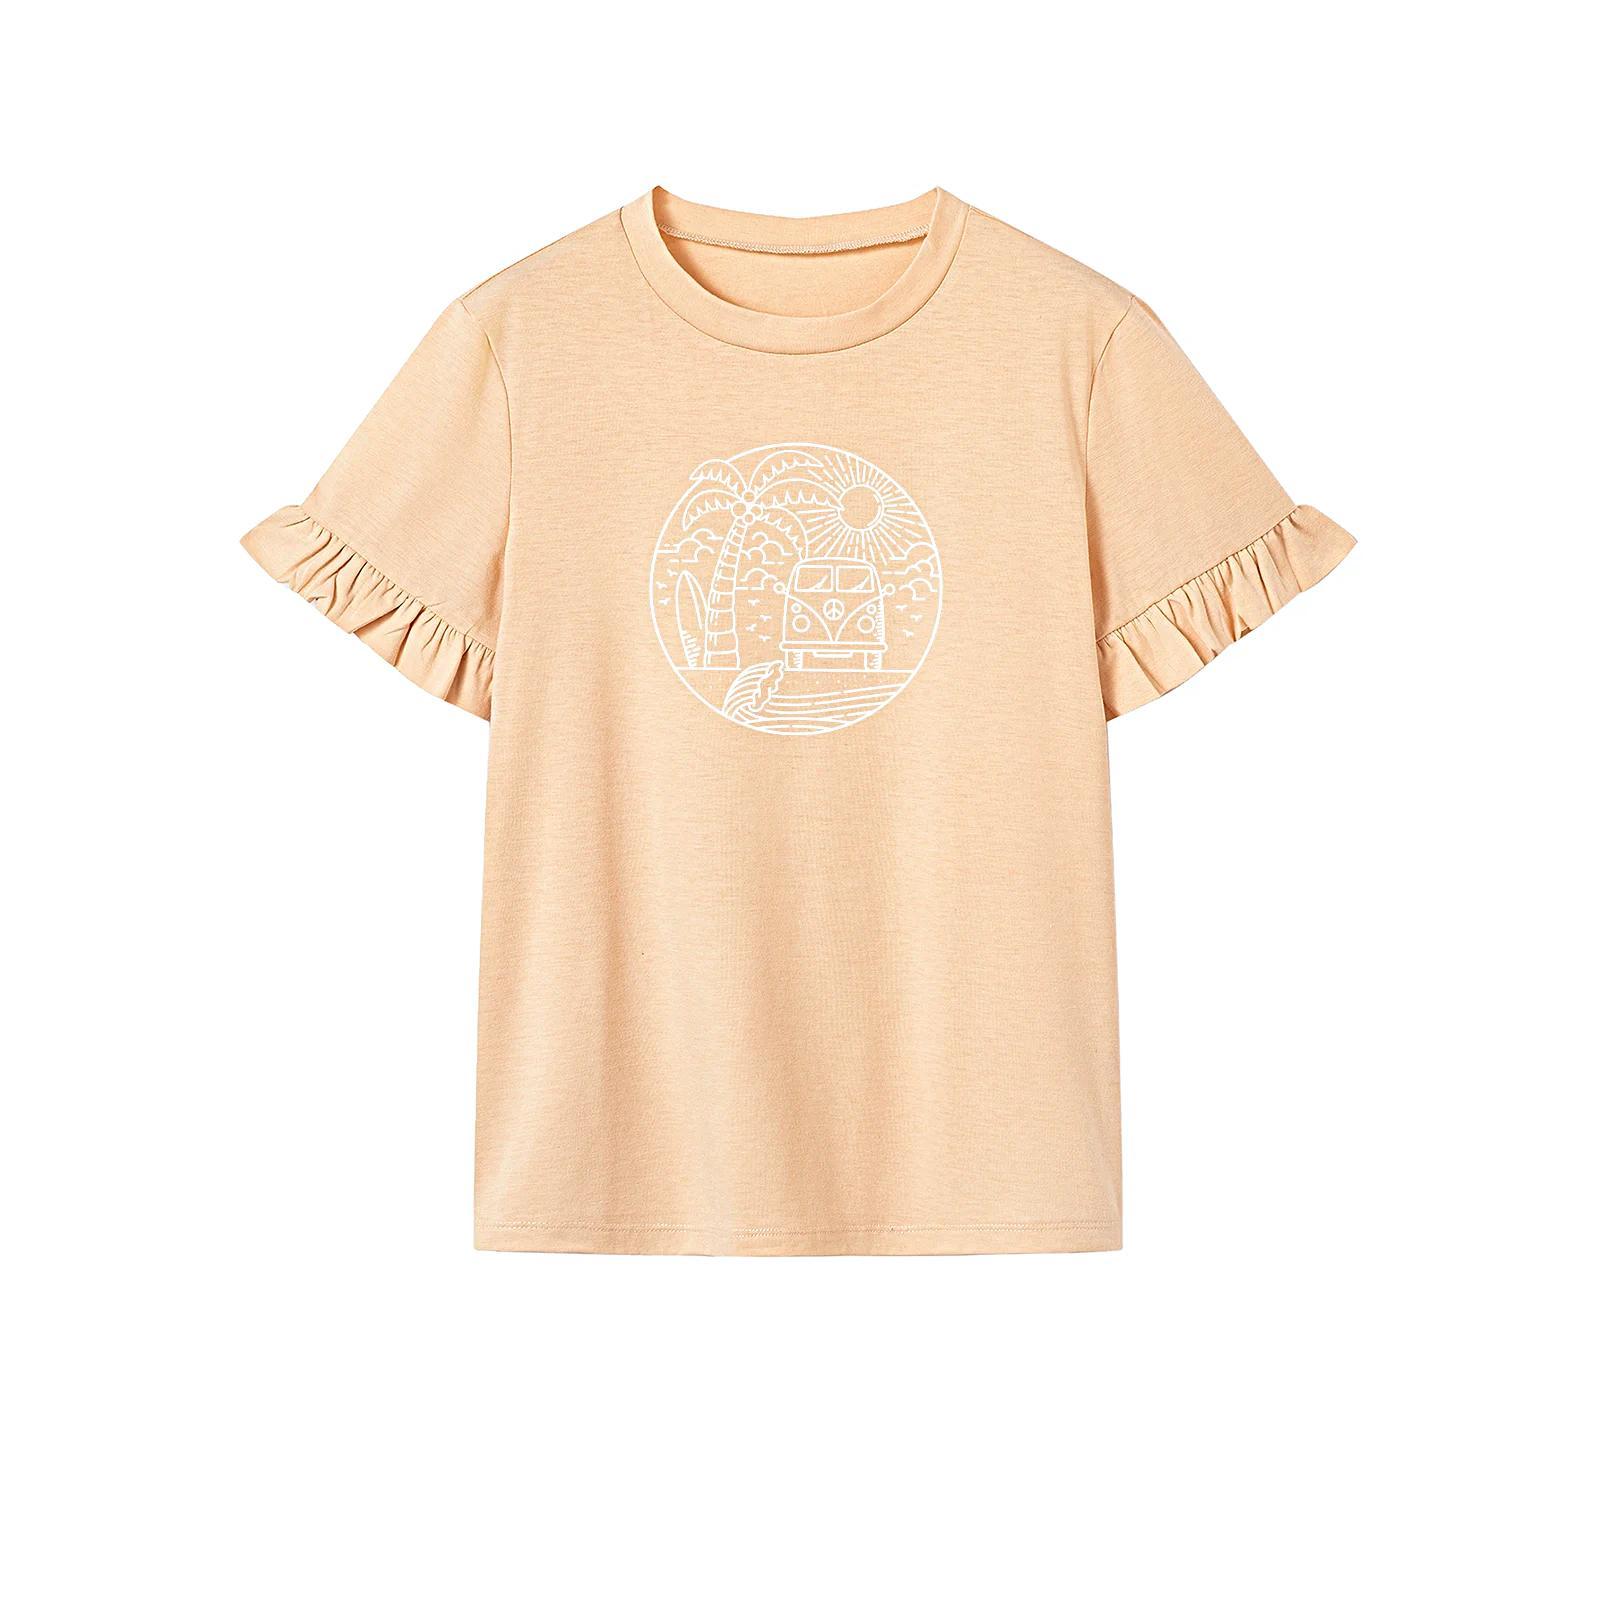 T Shirt for Women Summer Fashion Soft Crewneck Shirt for Camping Trip Street S